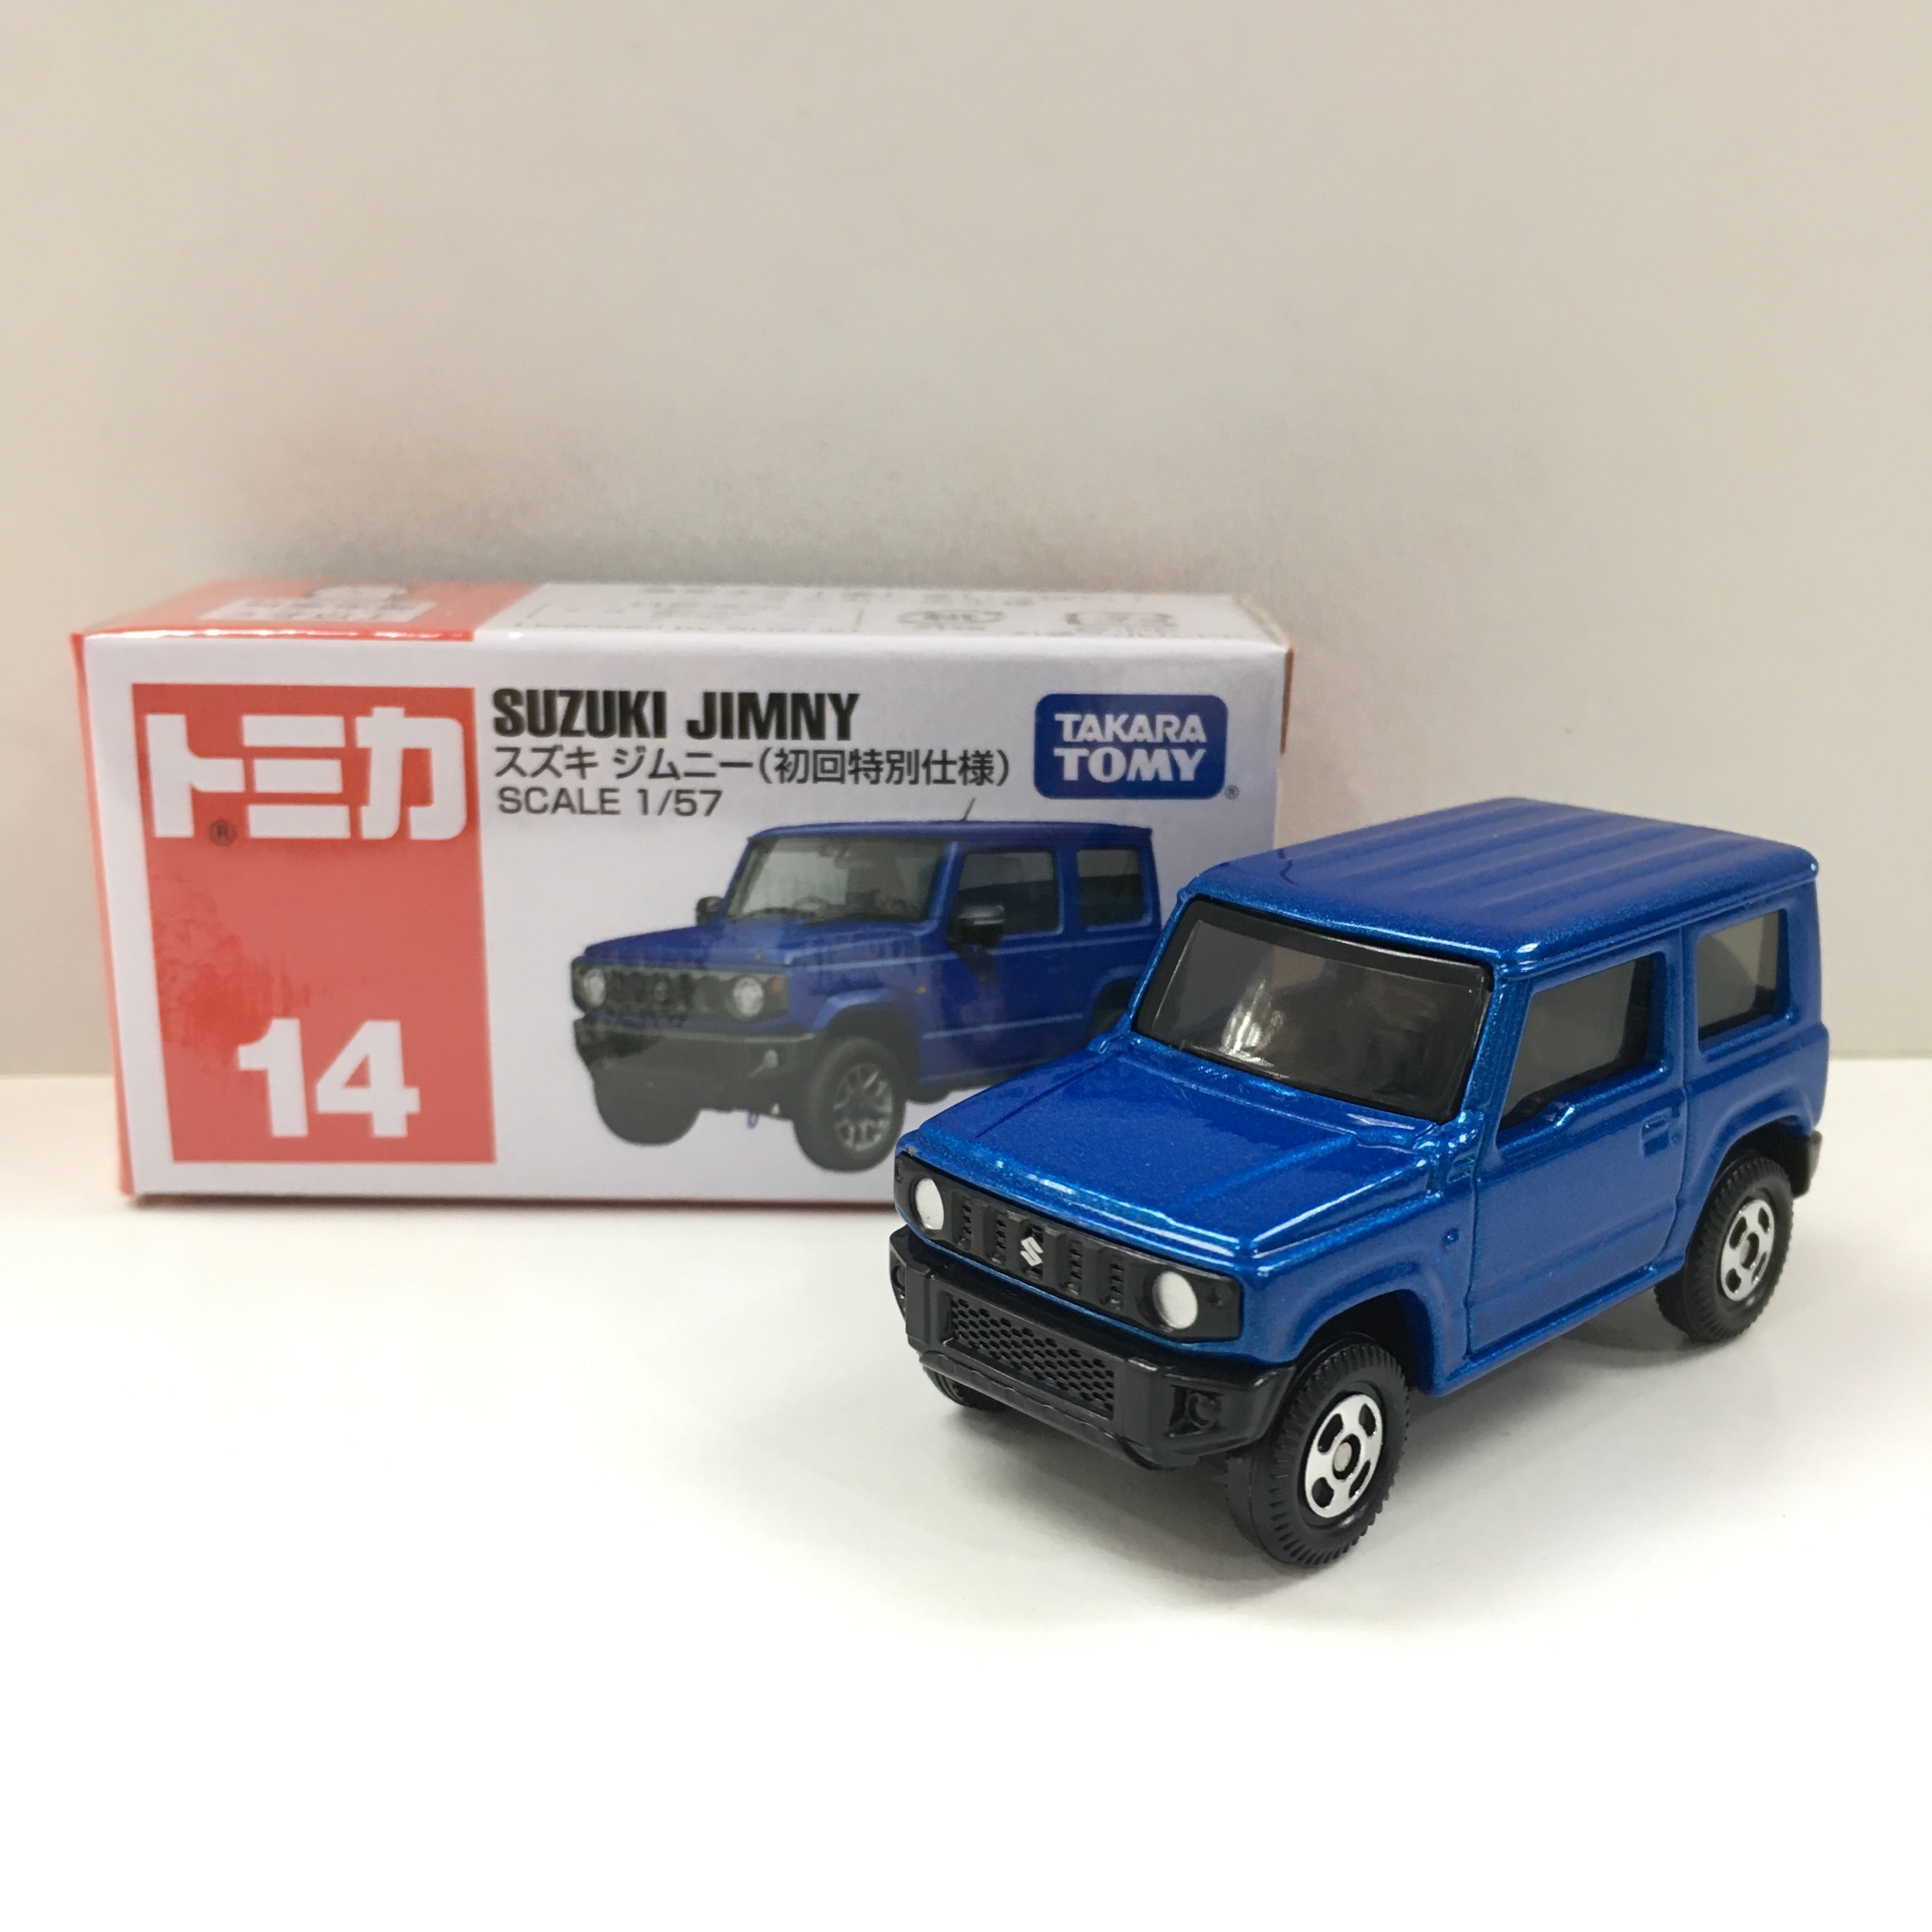 Tomica #014 Suzuki Jimny (Initial Release)